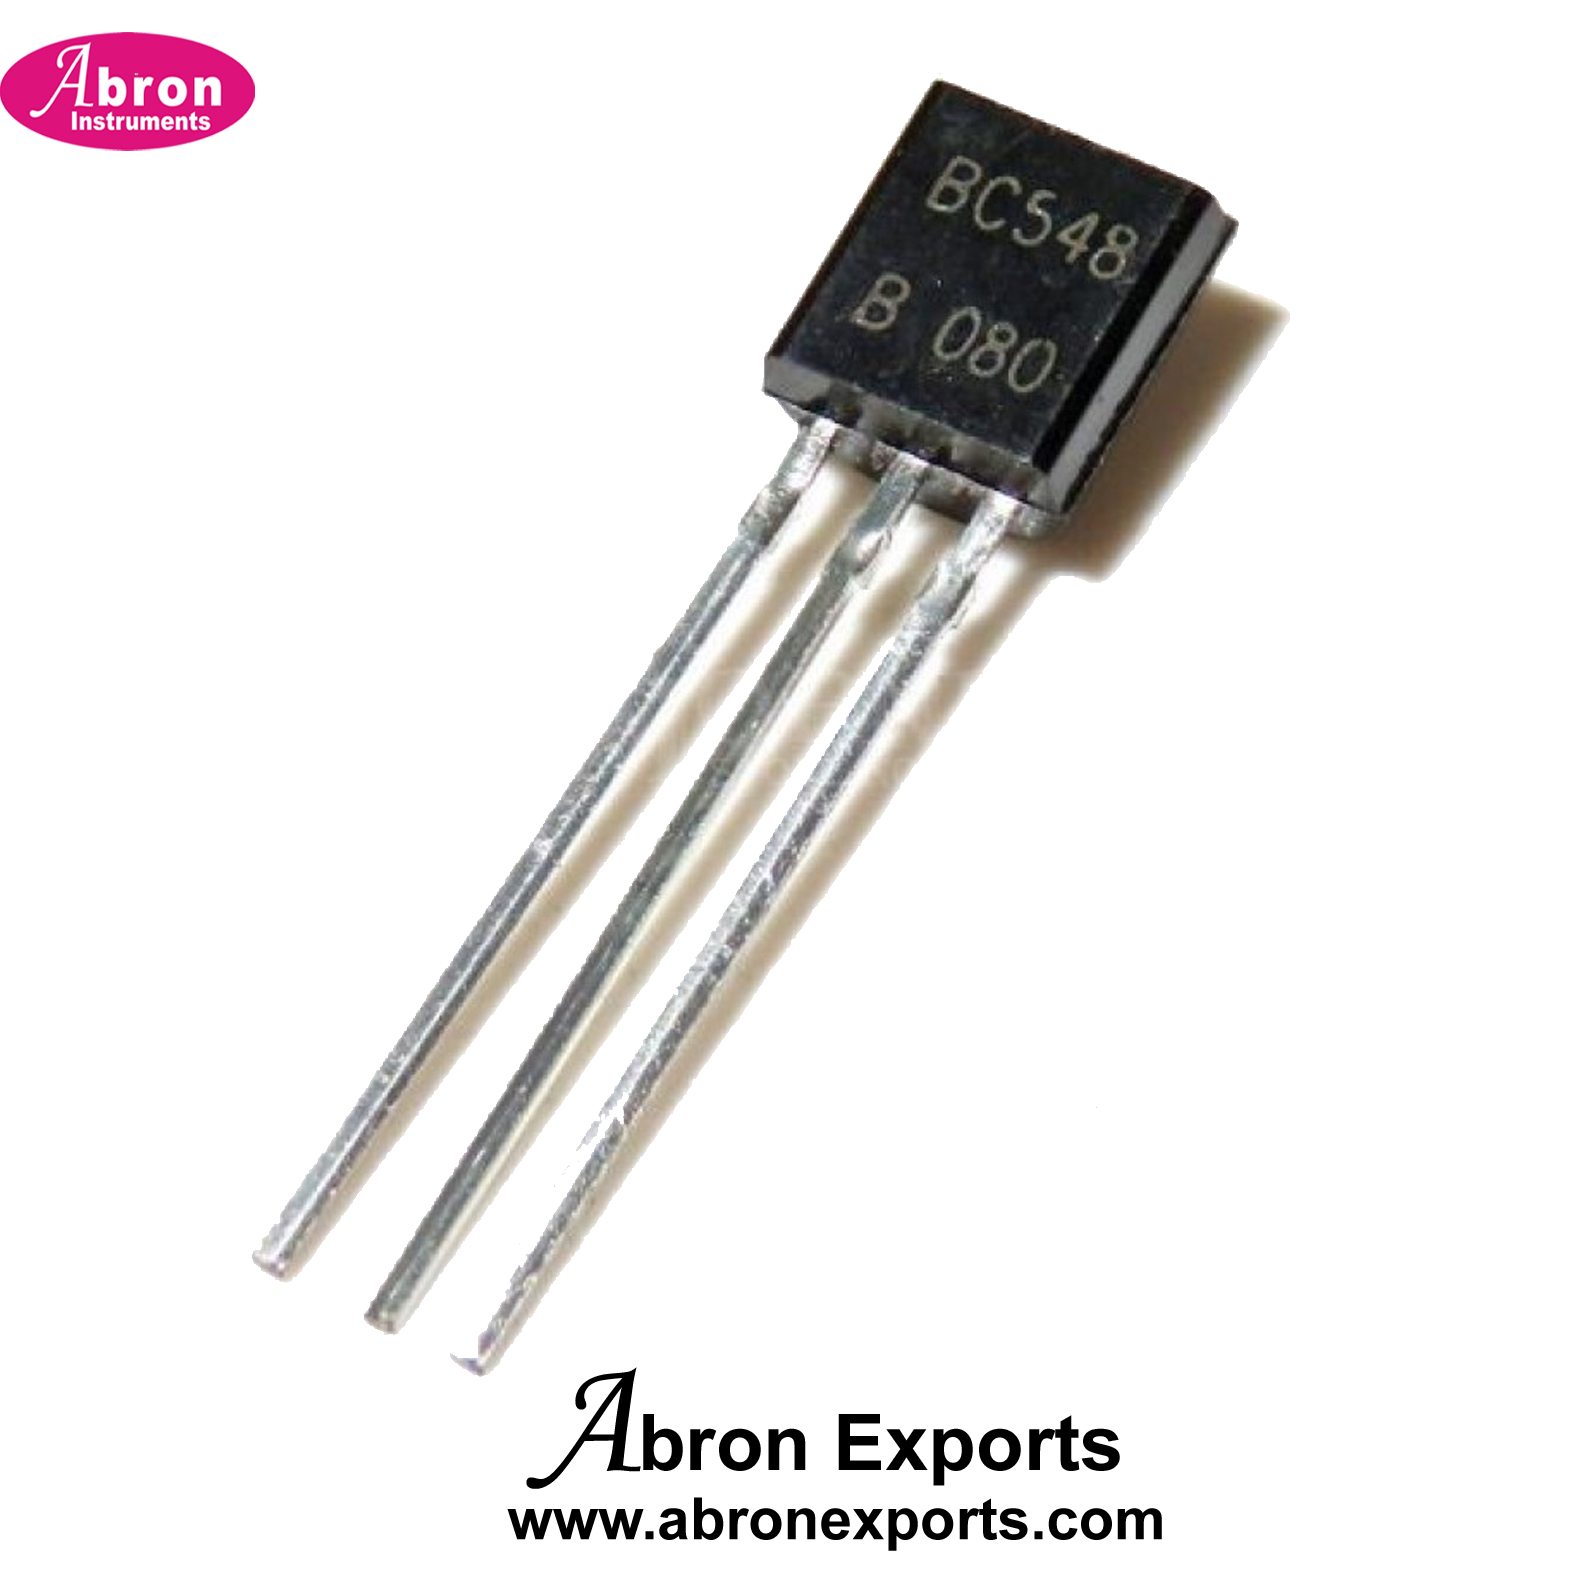 Electronic Component Transistor BC 548 Transistor 3 Legs 100pc Abron AE-1224TBC548 